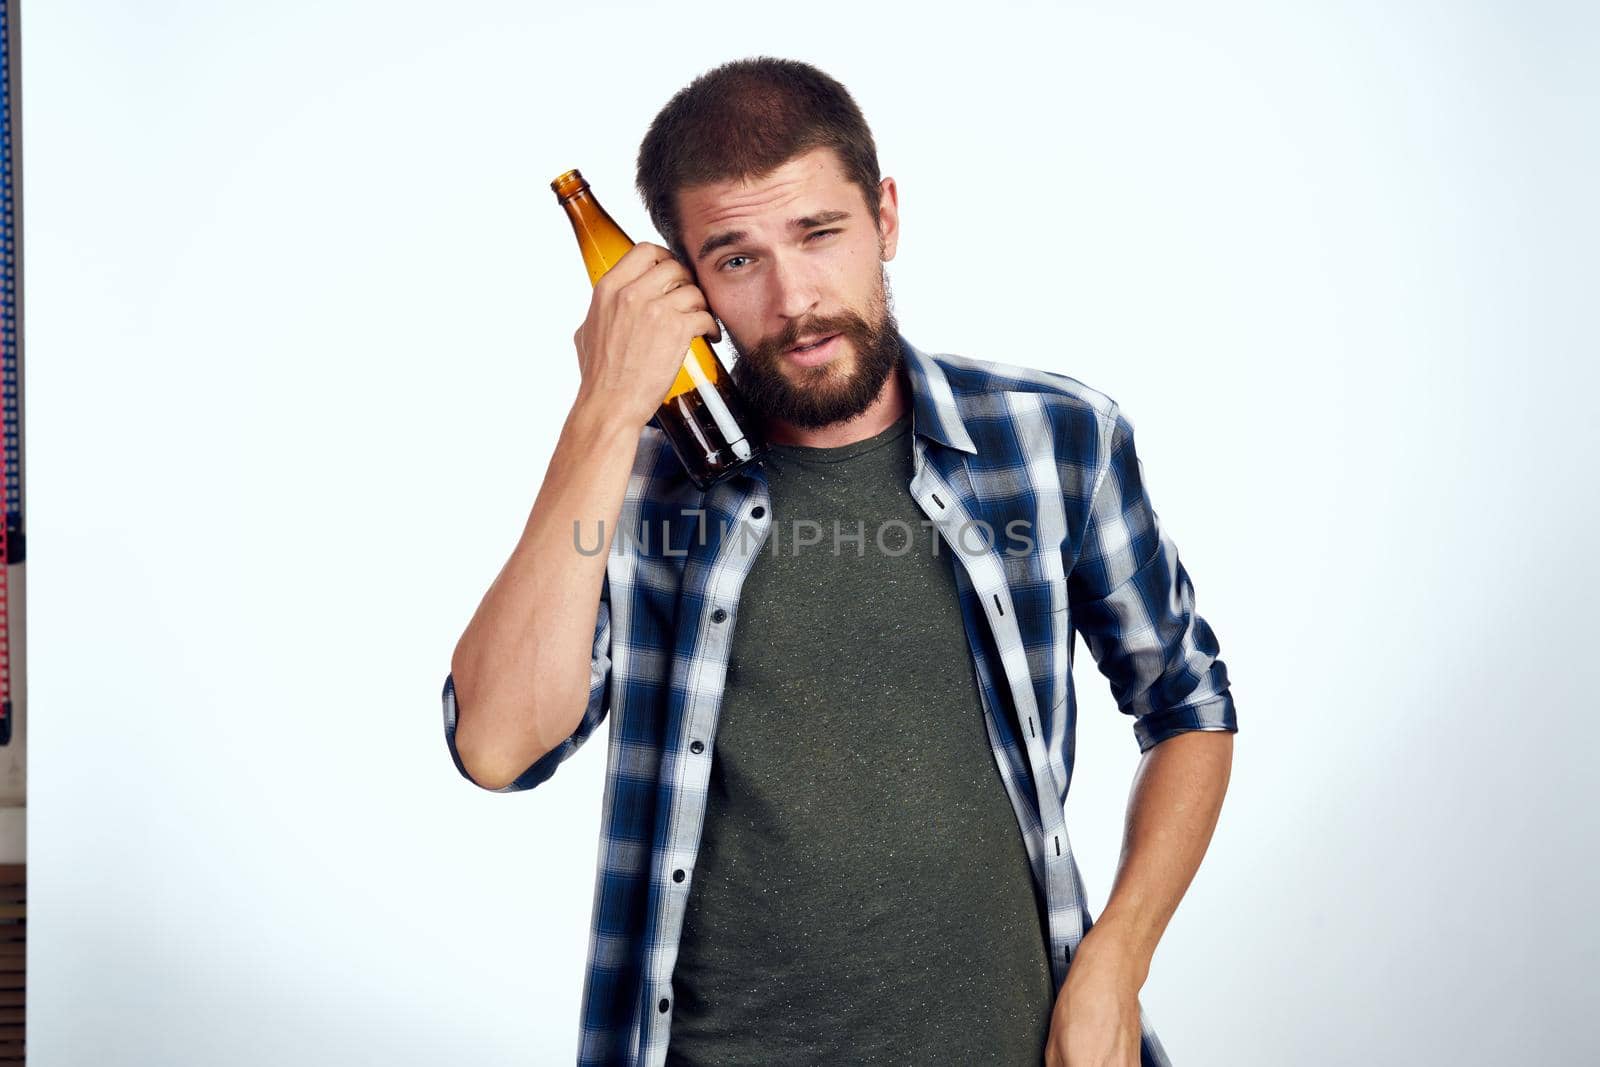 a man in a plaid shirt alcoholism problems emotions depression Lifestyle. High quality photo